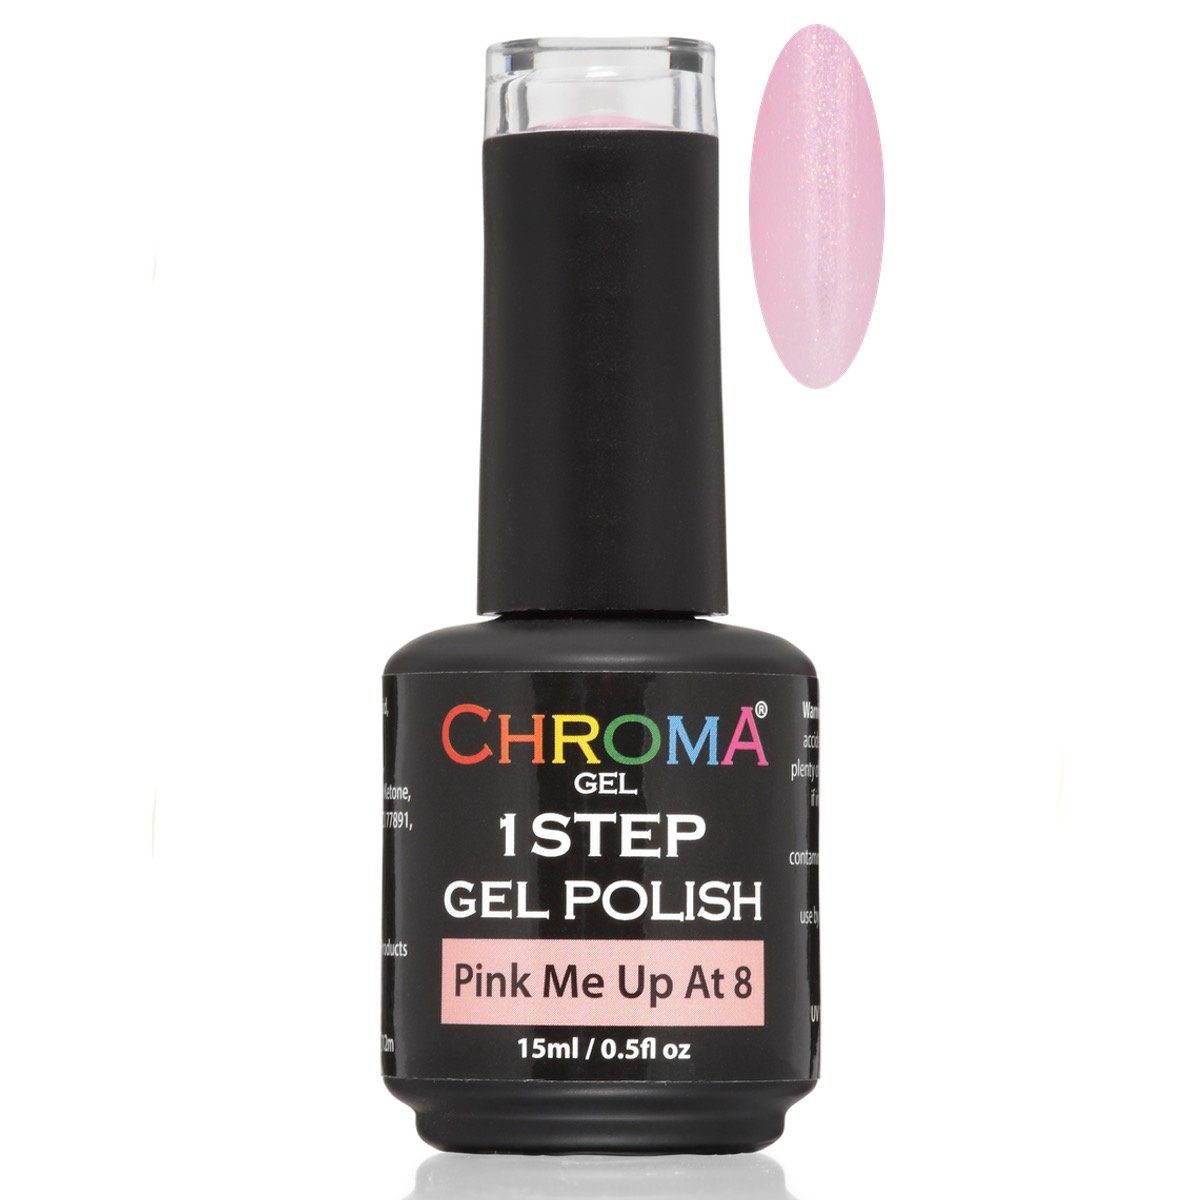 Chroma Gel 1 Step Gel Polish Pink Me Up At 8 No.56 - Beauty Hair Products LtdChroma Gel